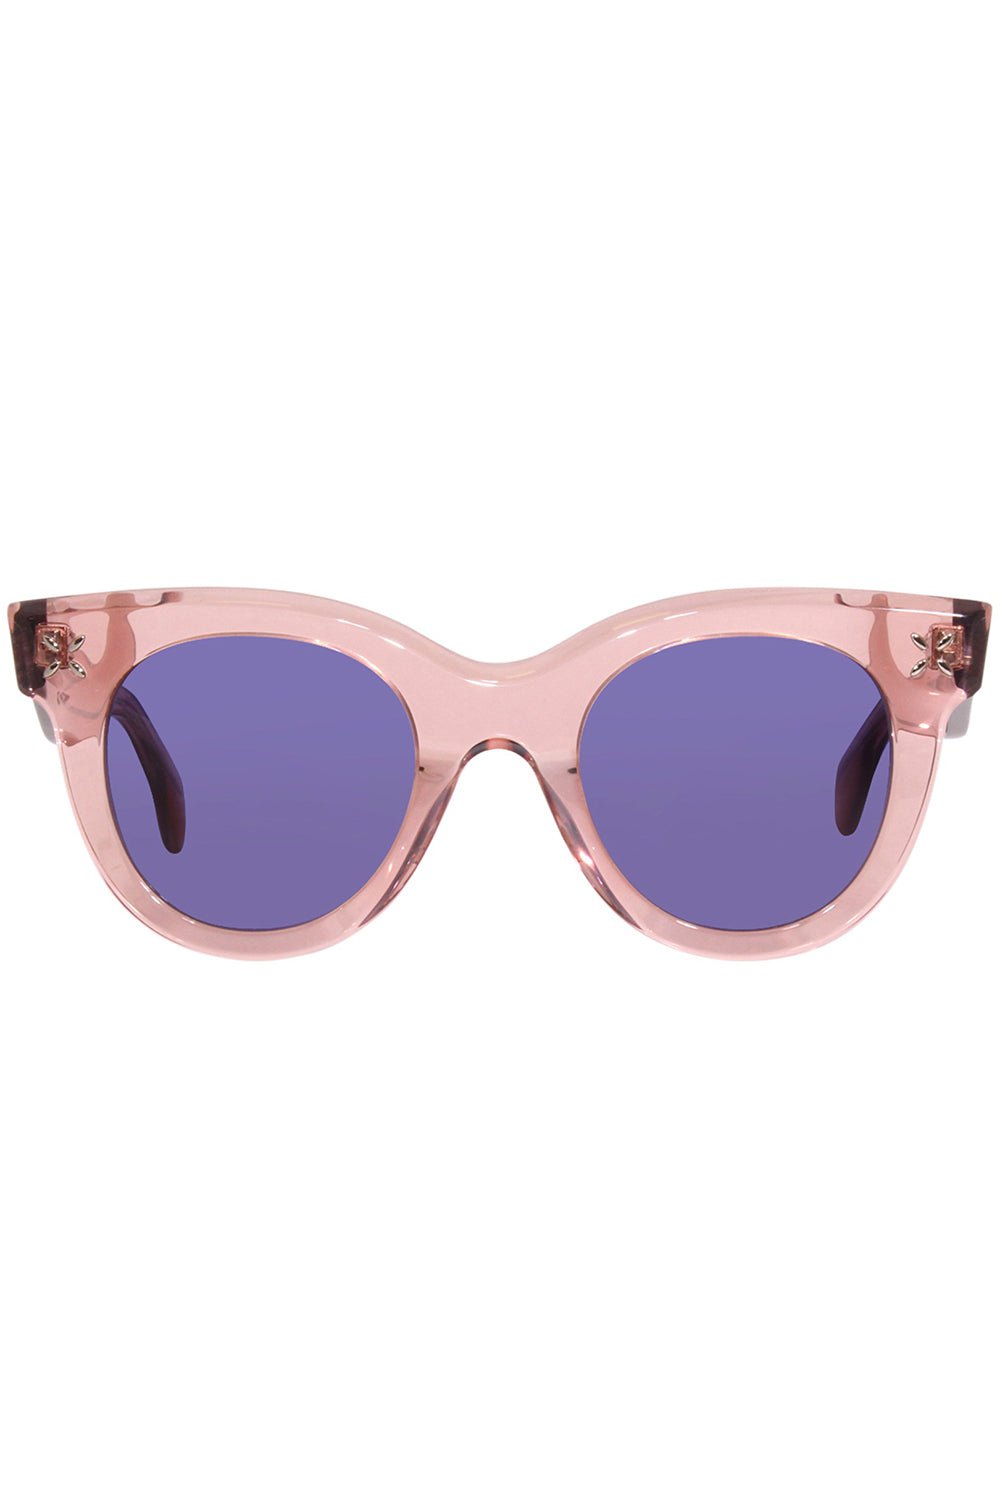 ALAÏA-Cat Eye Sunglasses-PINK/BLUE